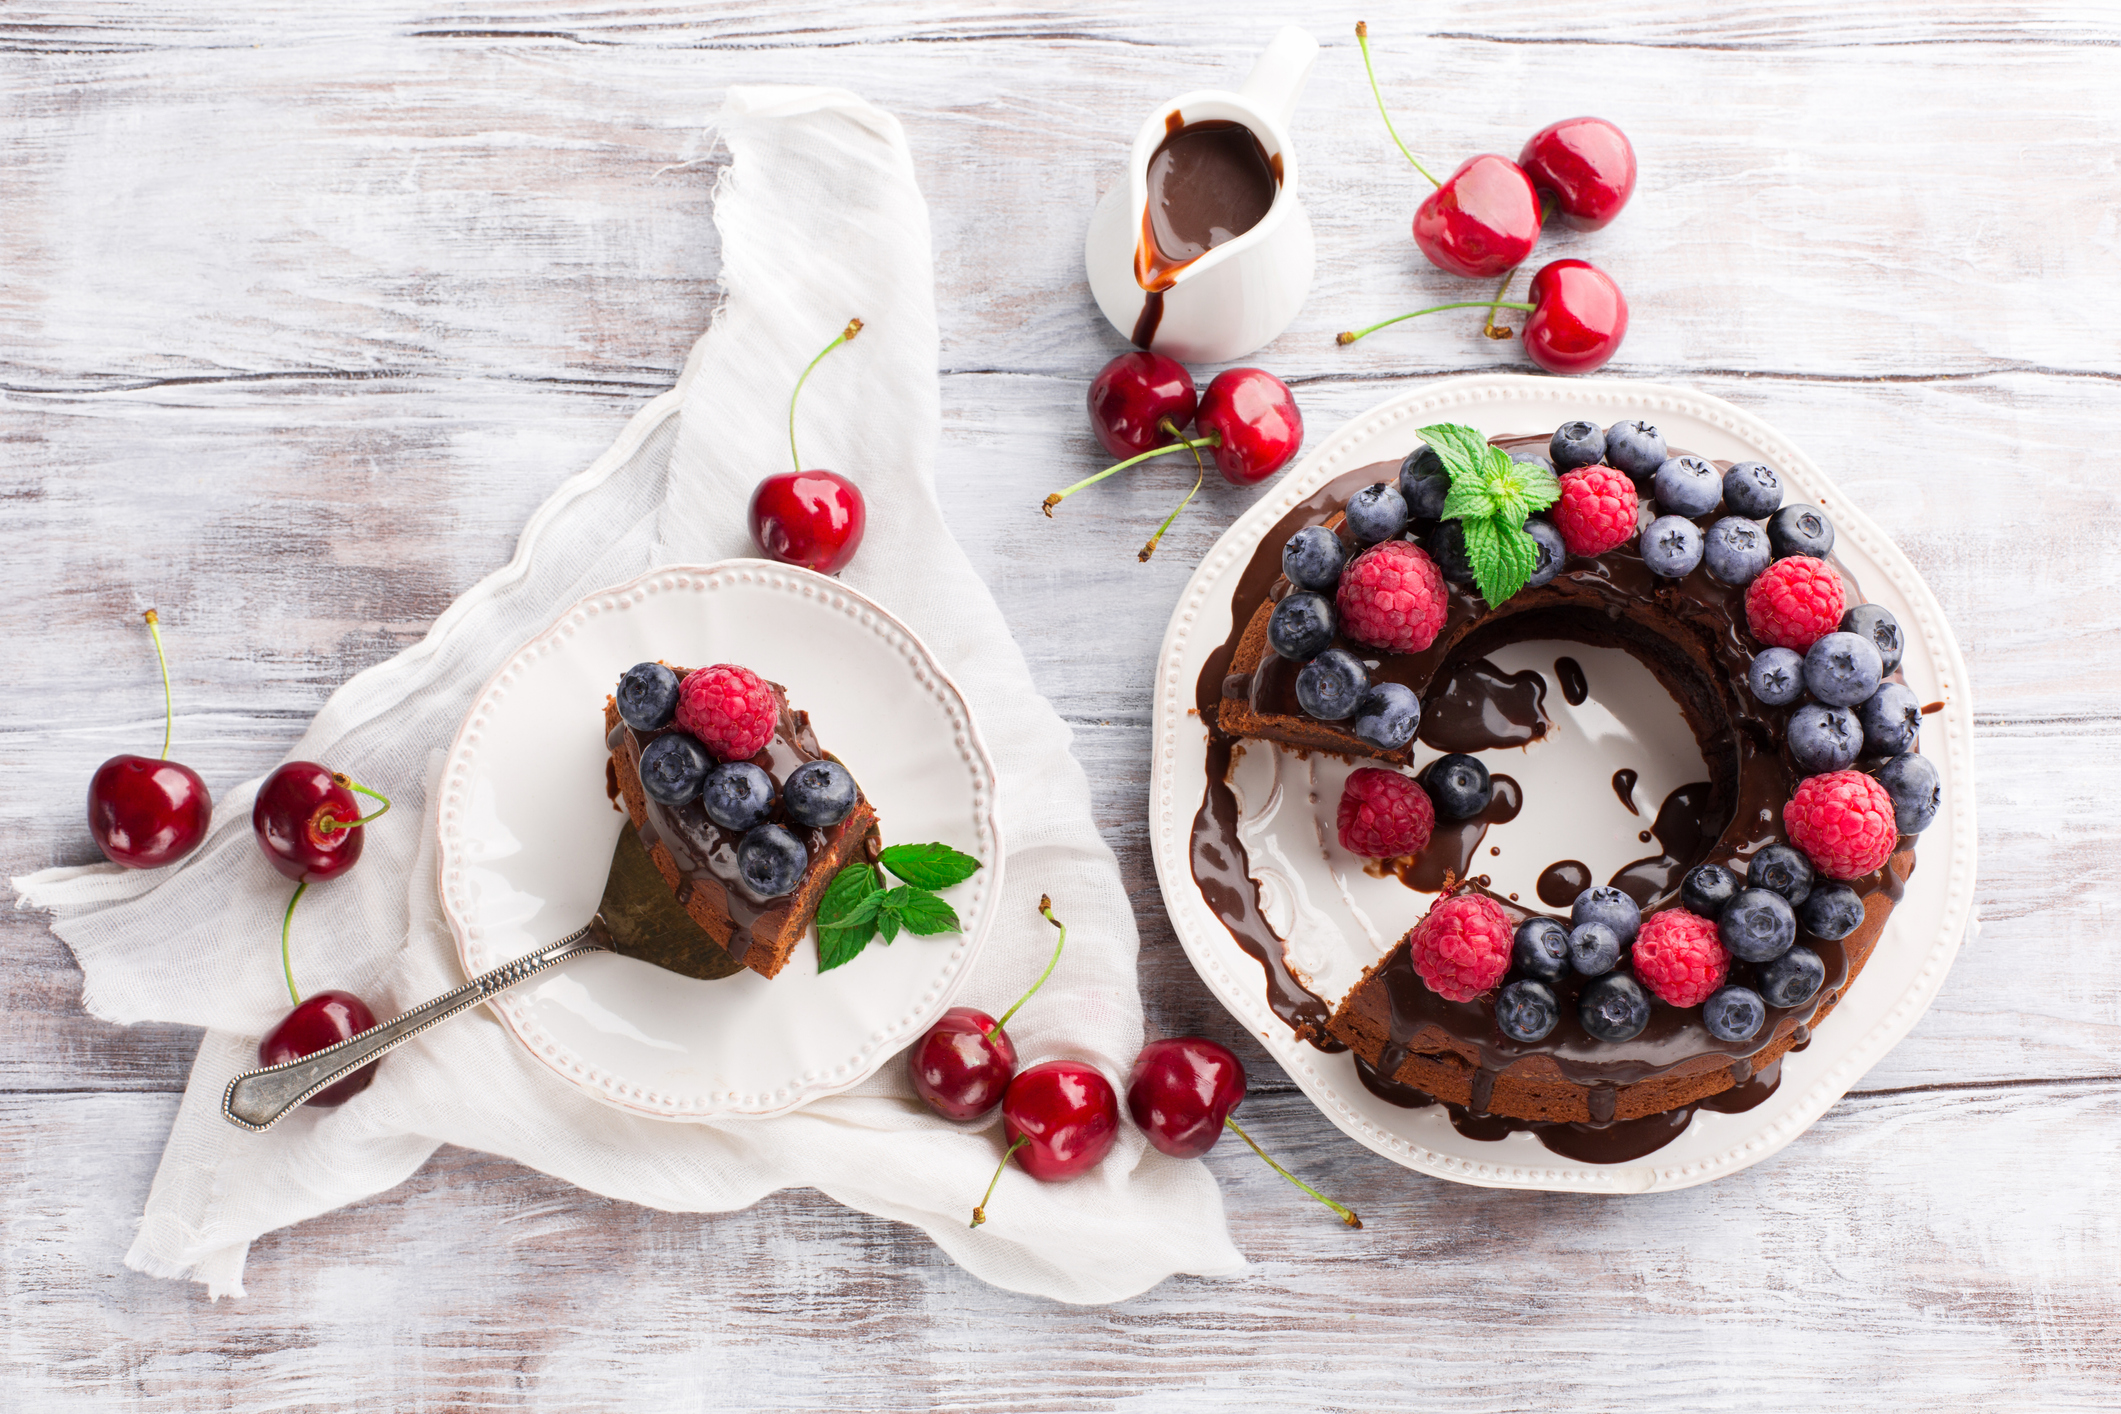 The dessert that offers 4 big health benefits